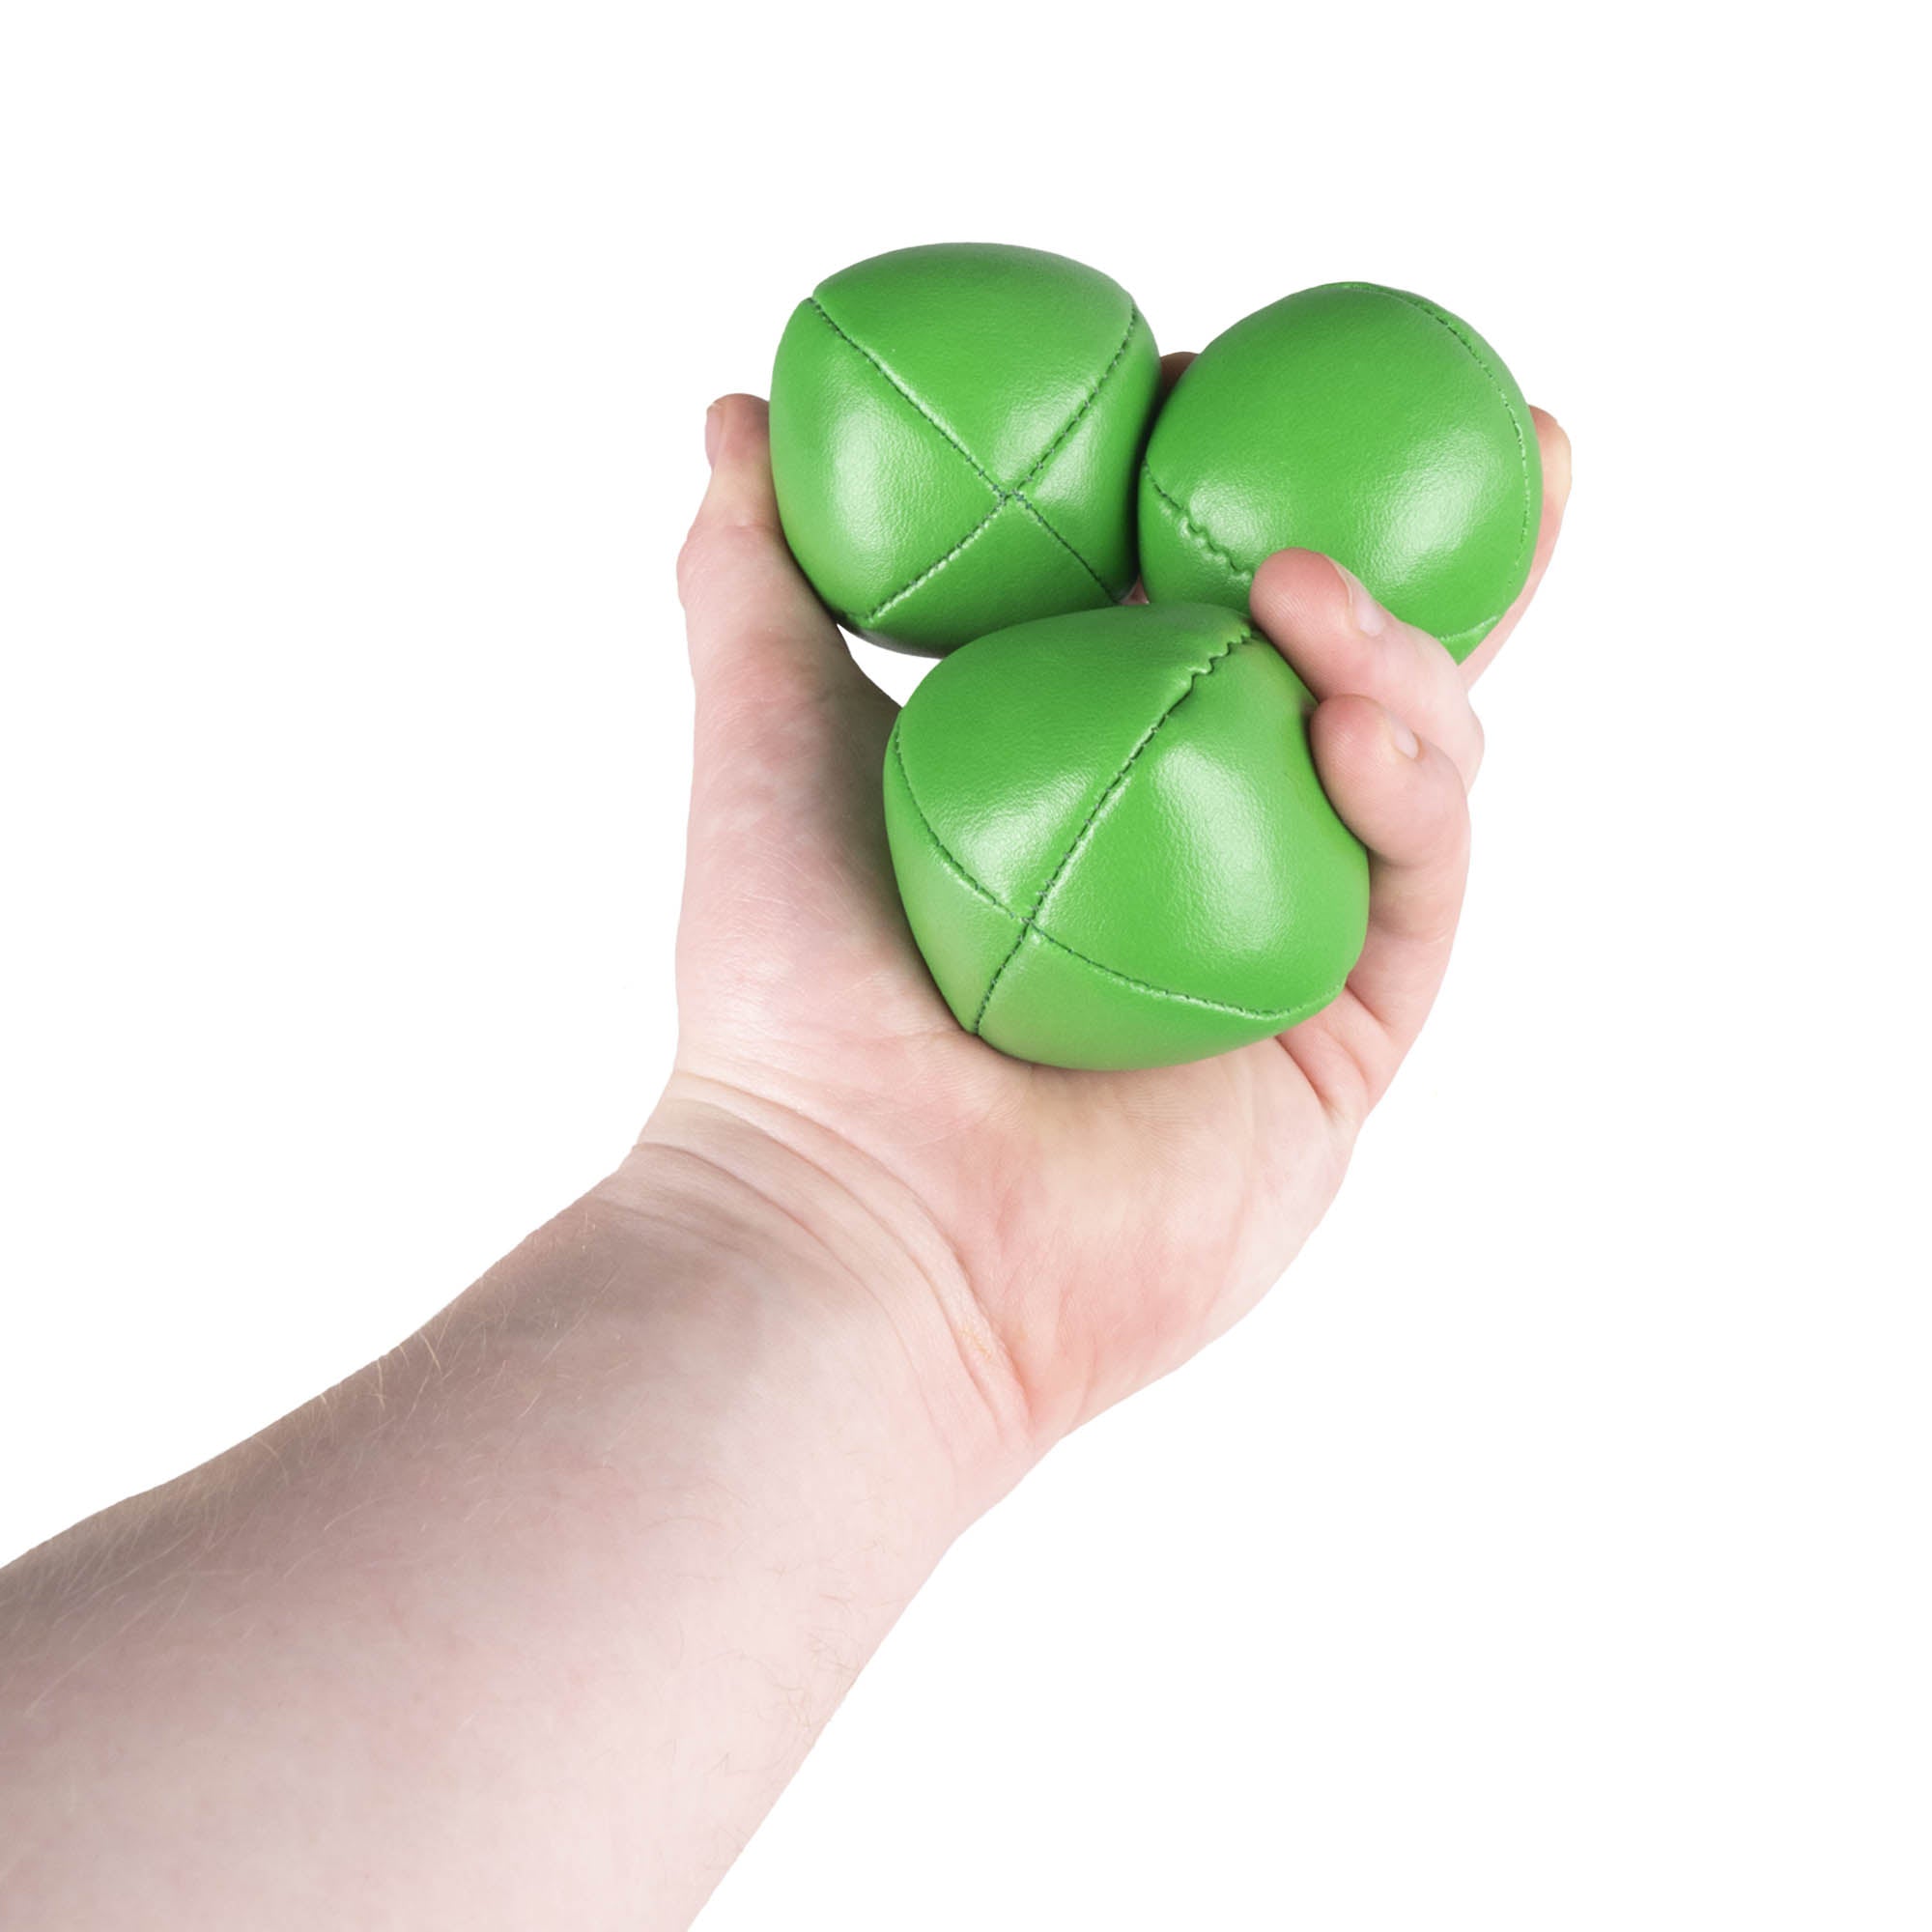 3 green balls in hand